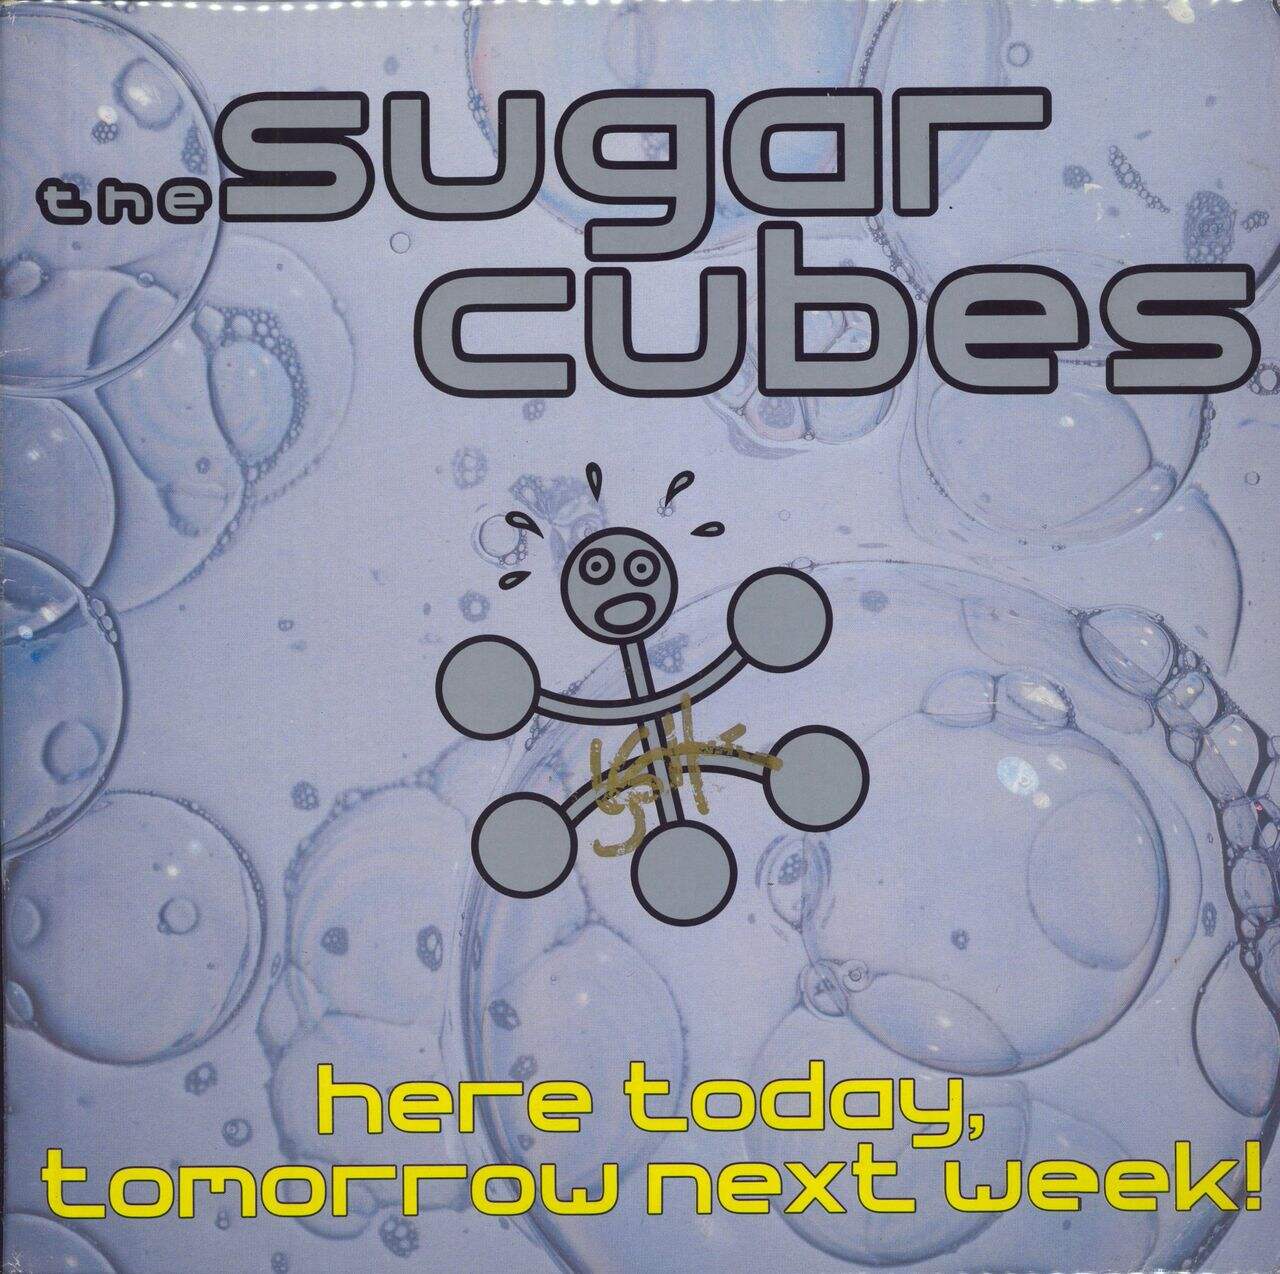 The Sugarcubes Here Today, Tomorrow Next Week! - Autographed UK Vinyl LP